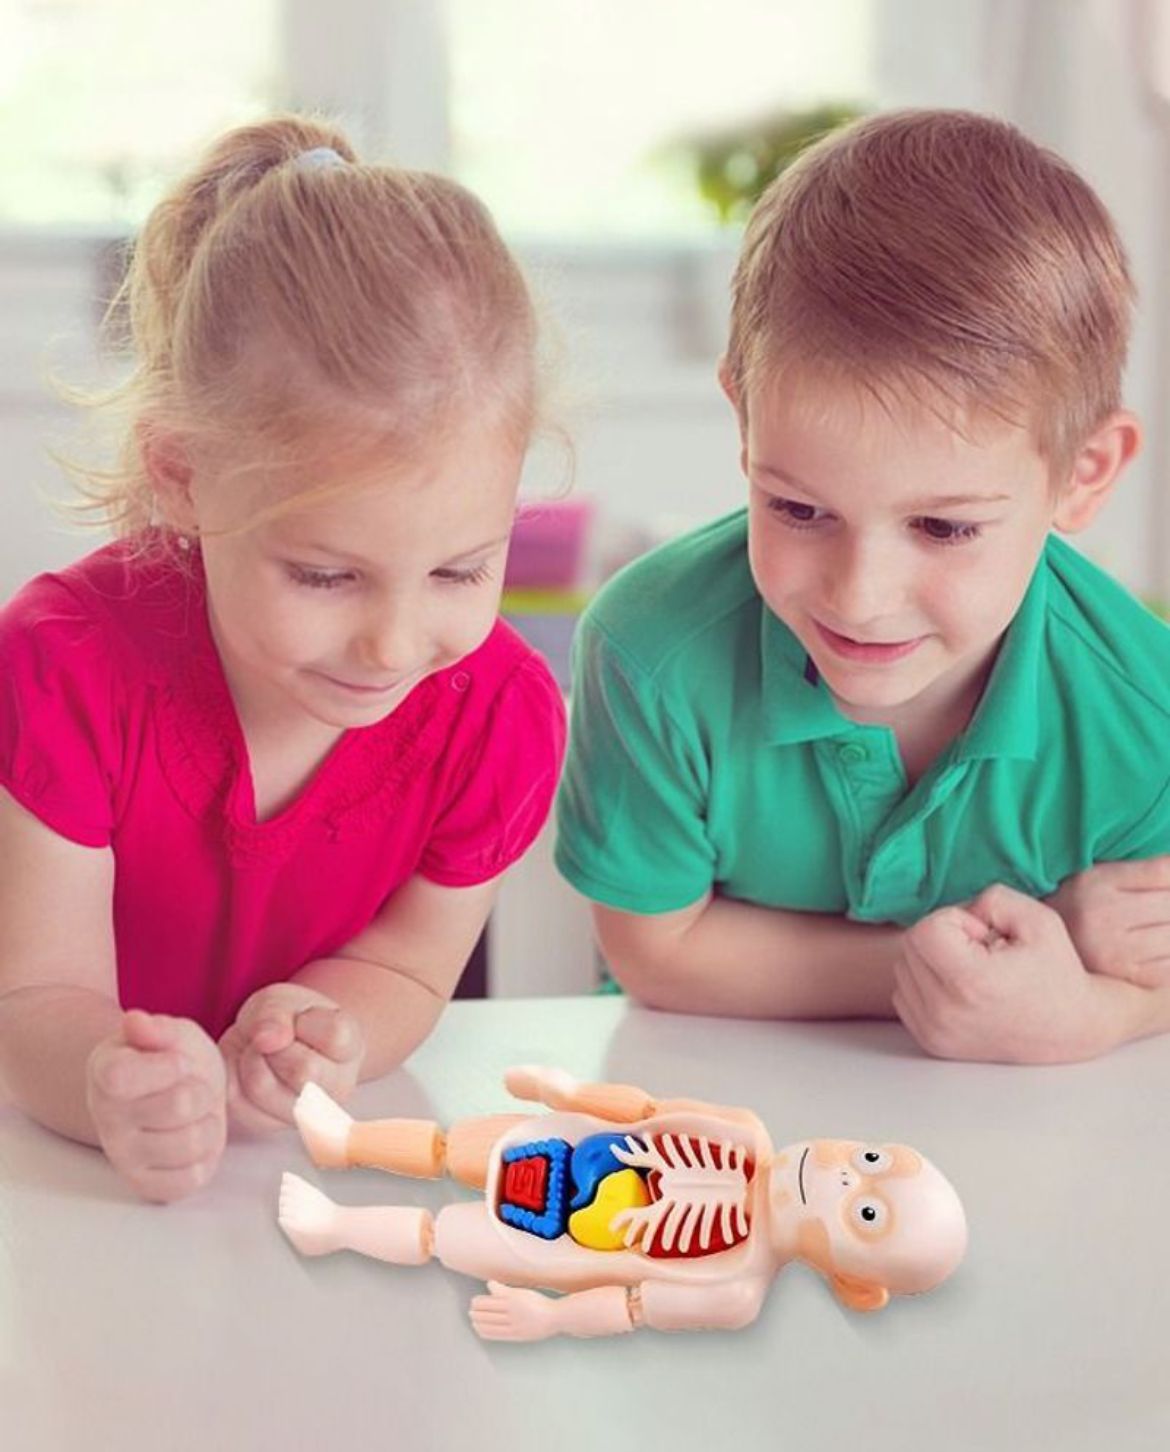 3D Model Human Body Educational Toys for Kids